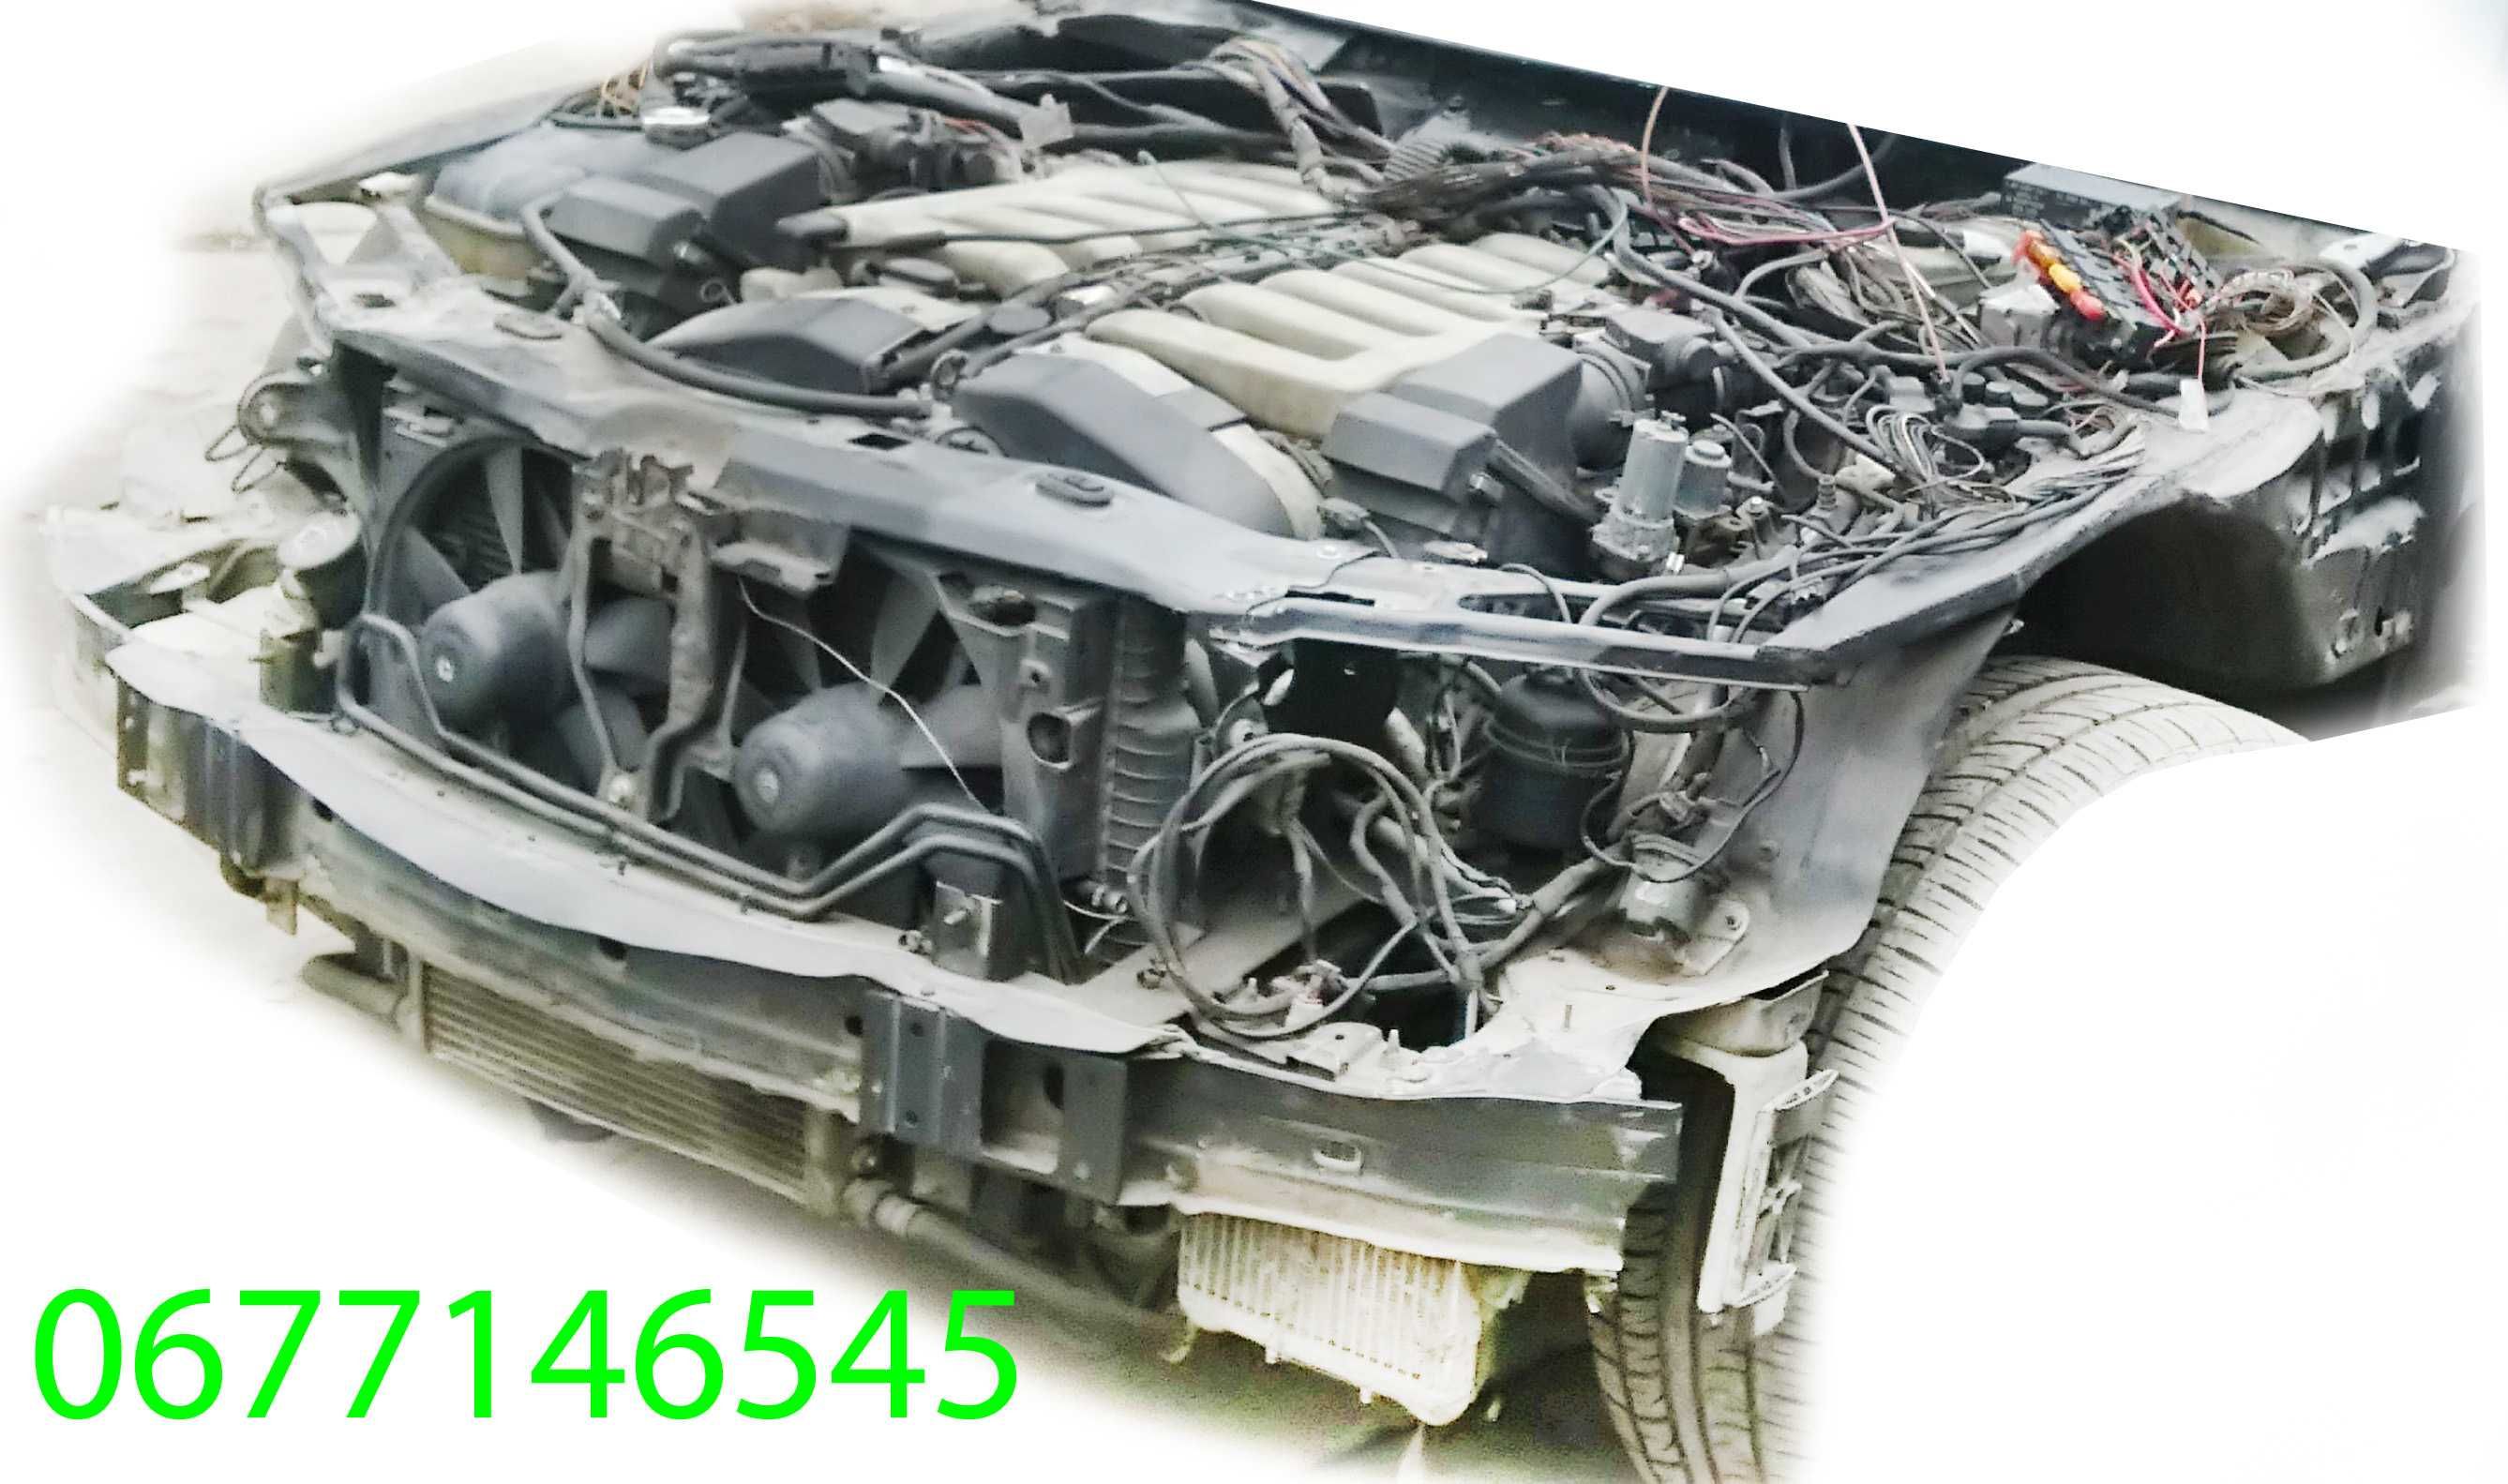 мотор двигатель двигун м120 W140 V12 акпп коробка навесное